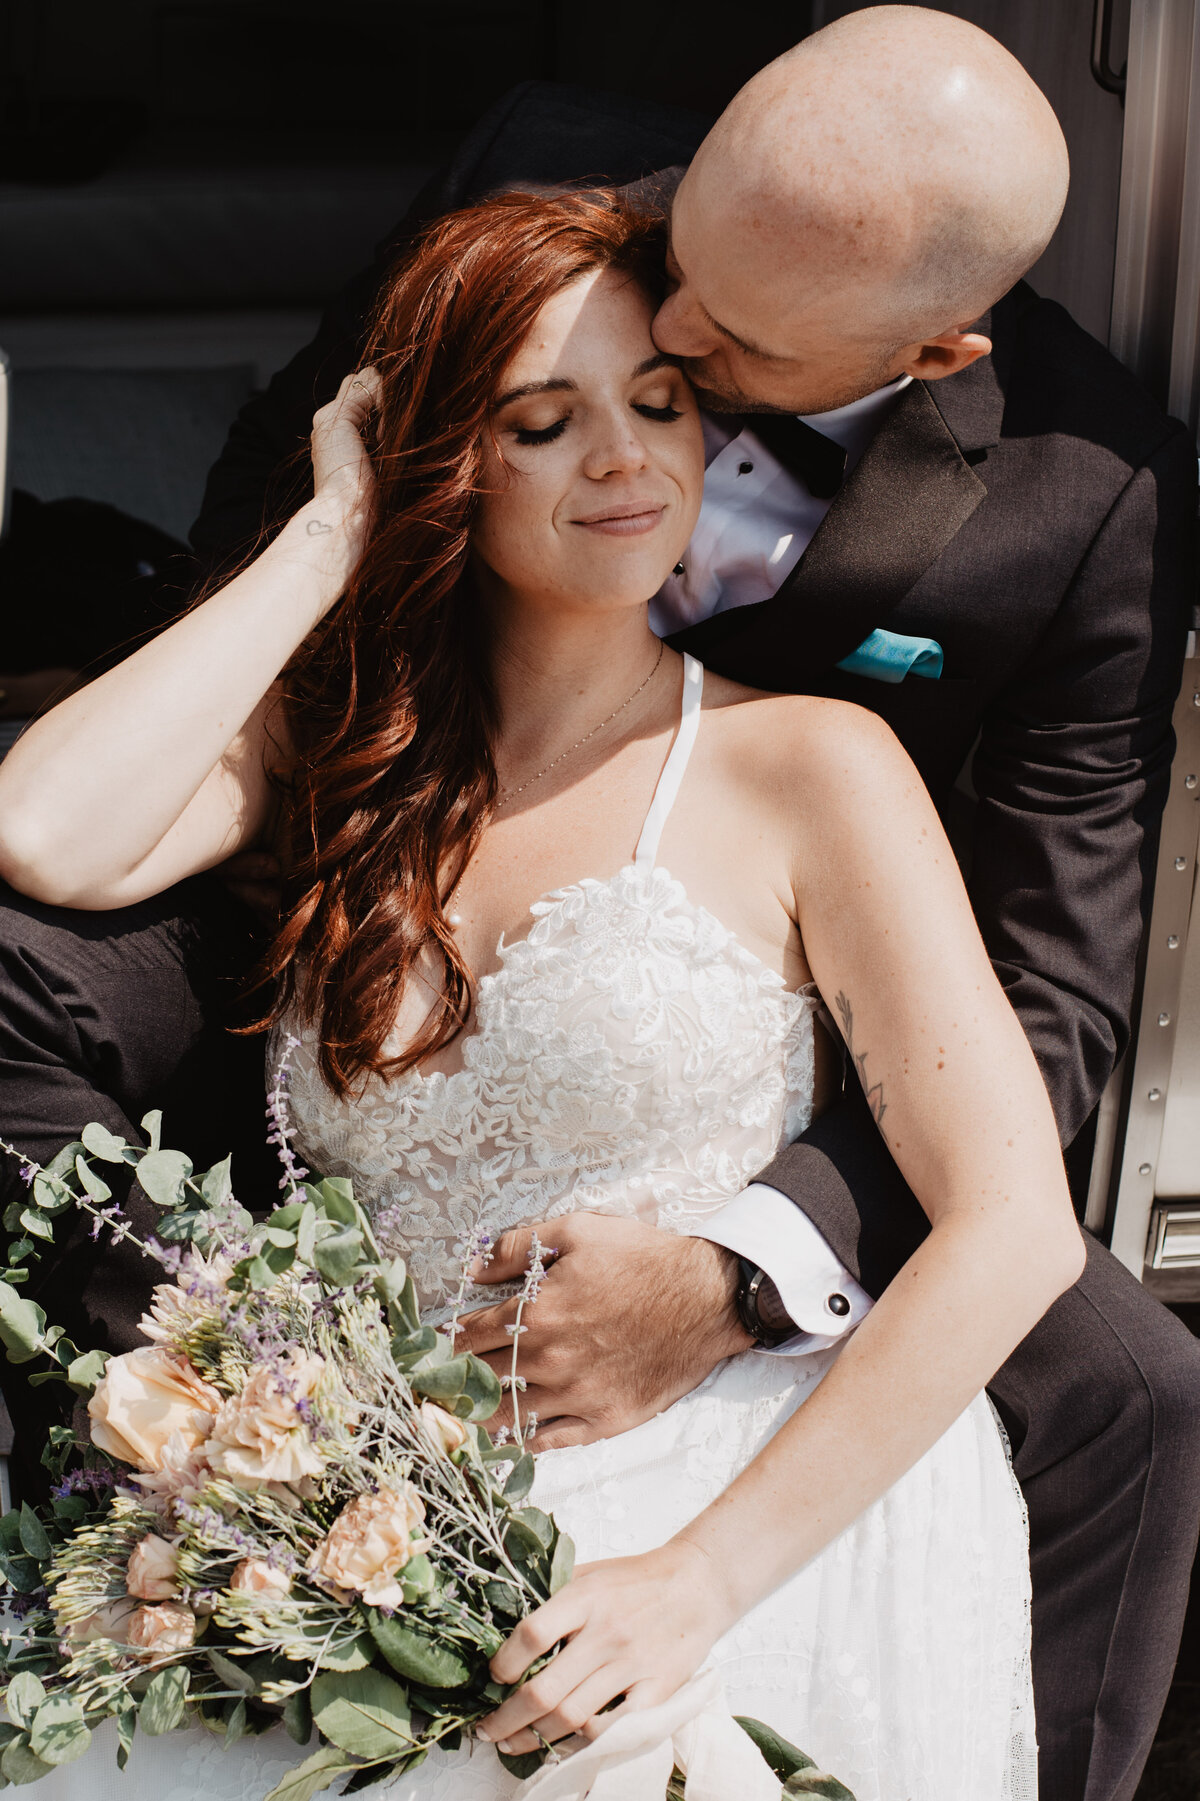 Jackson Hole photographers capture groom kissing bride's forehead